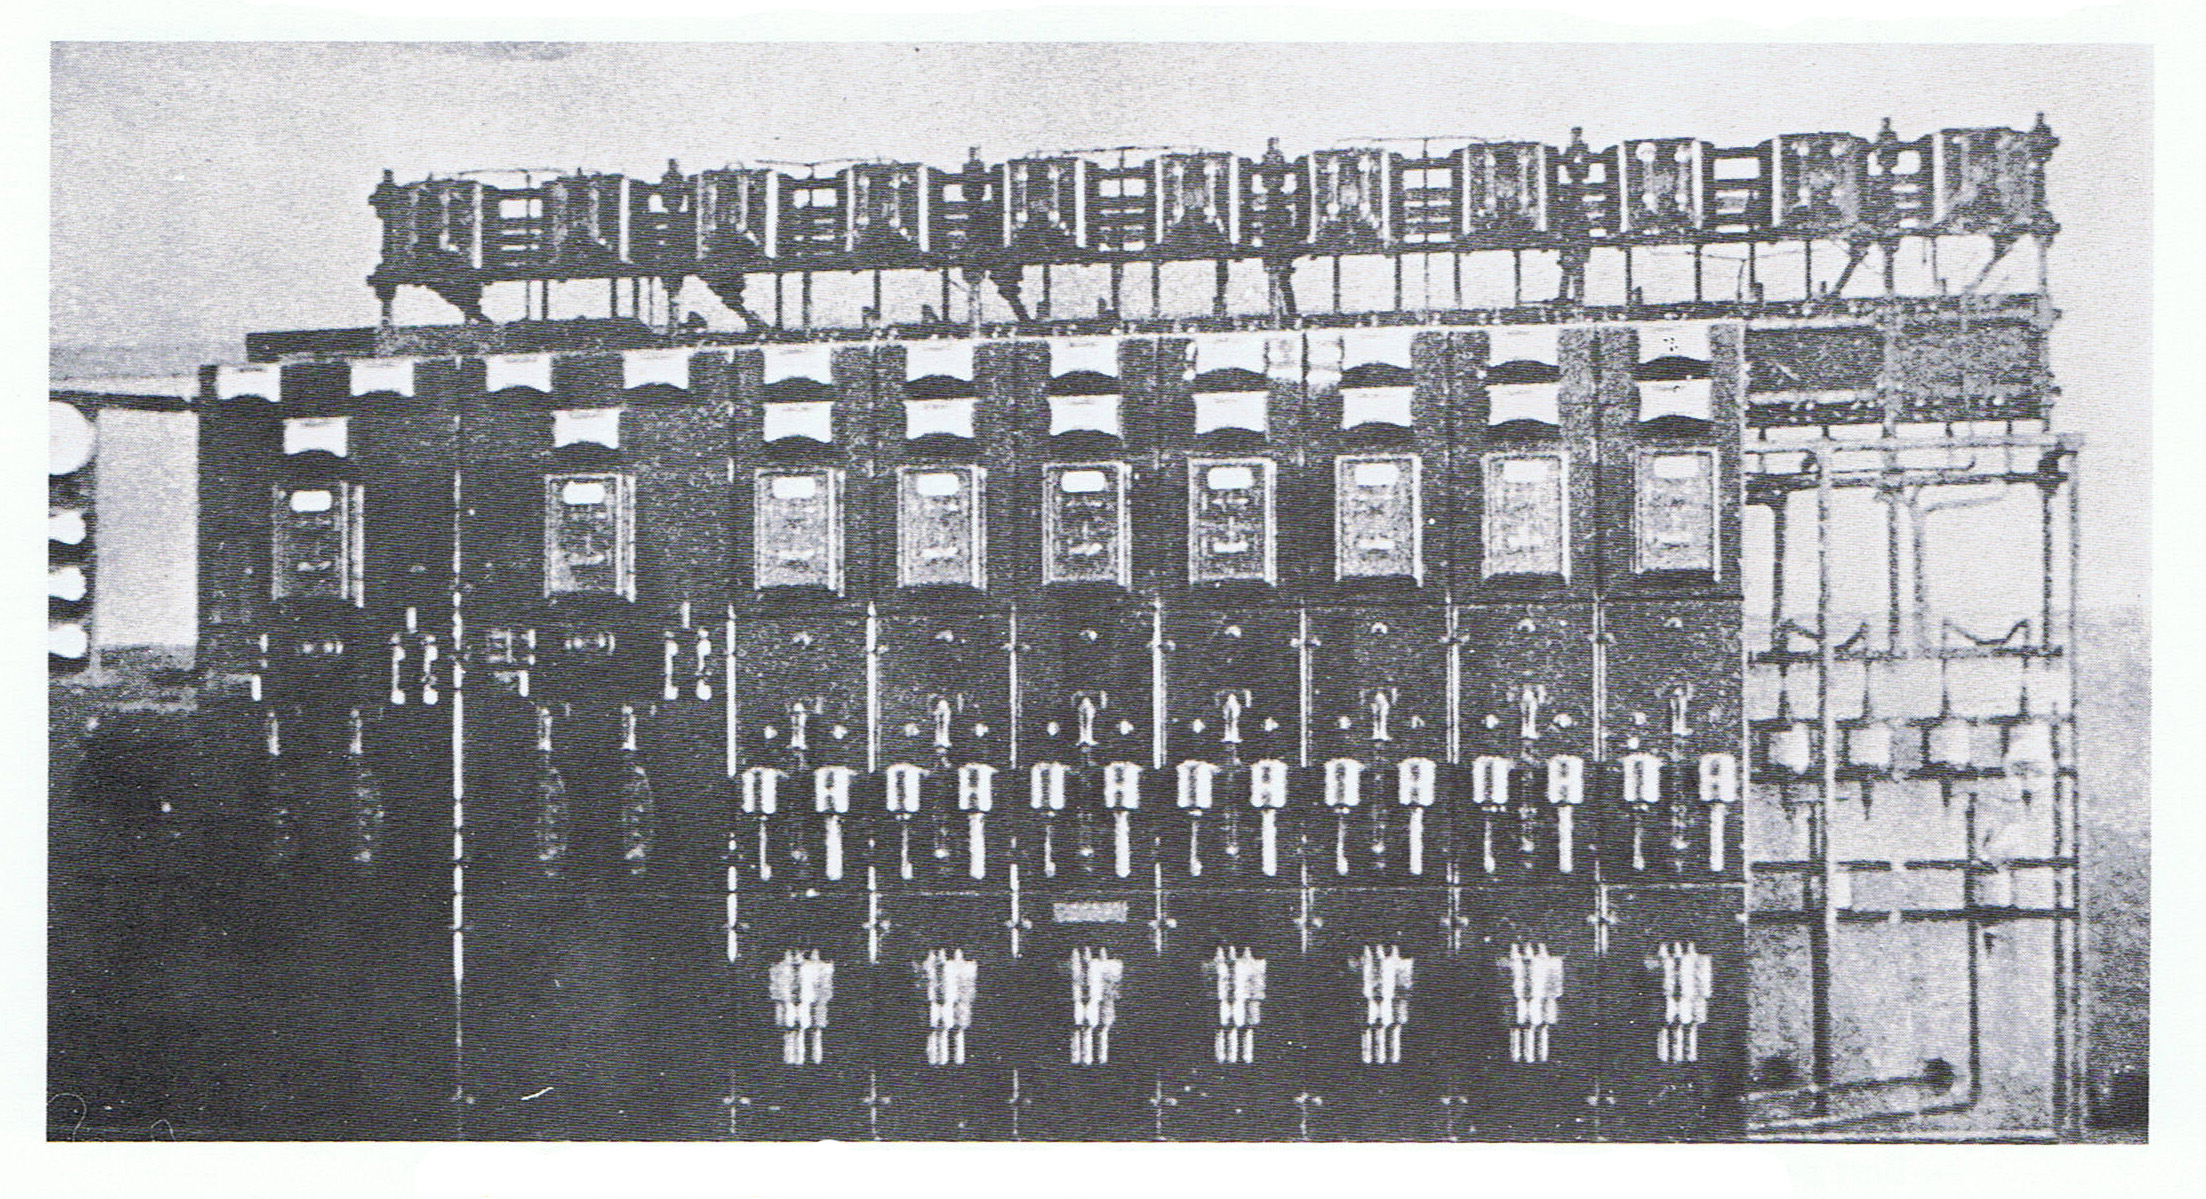 The original 5.5 kV switchboard